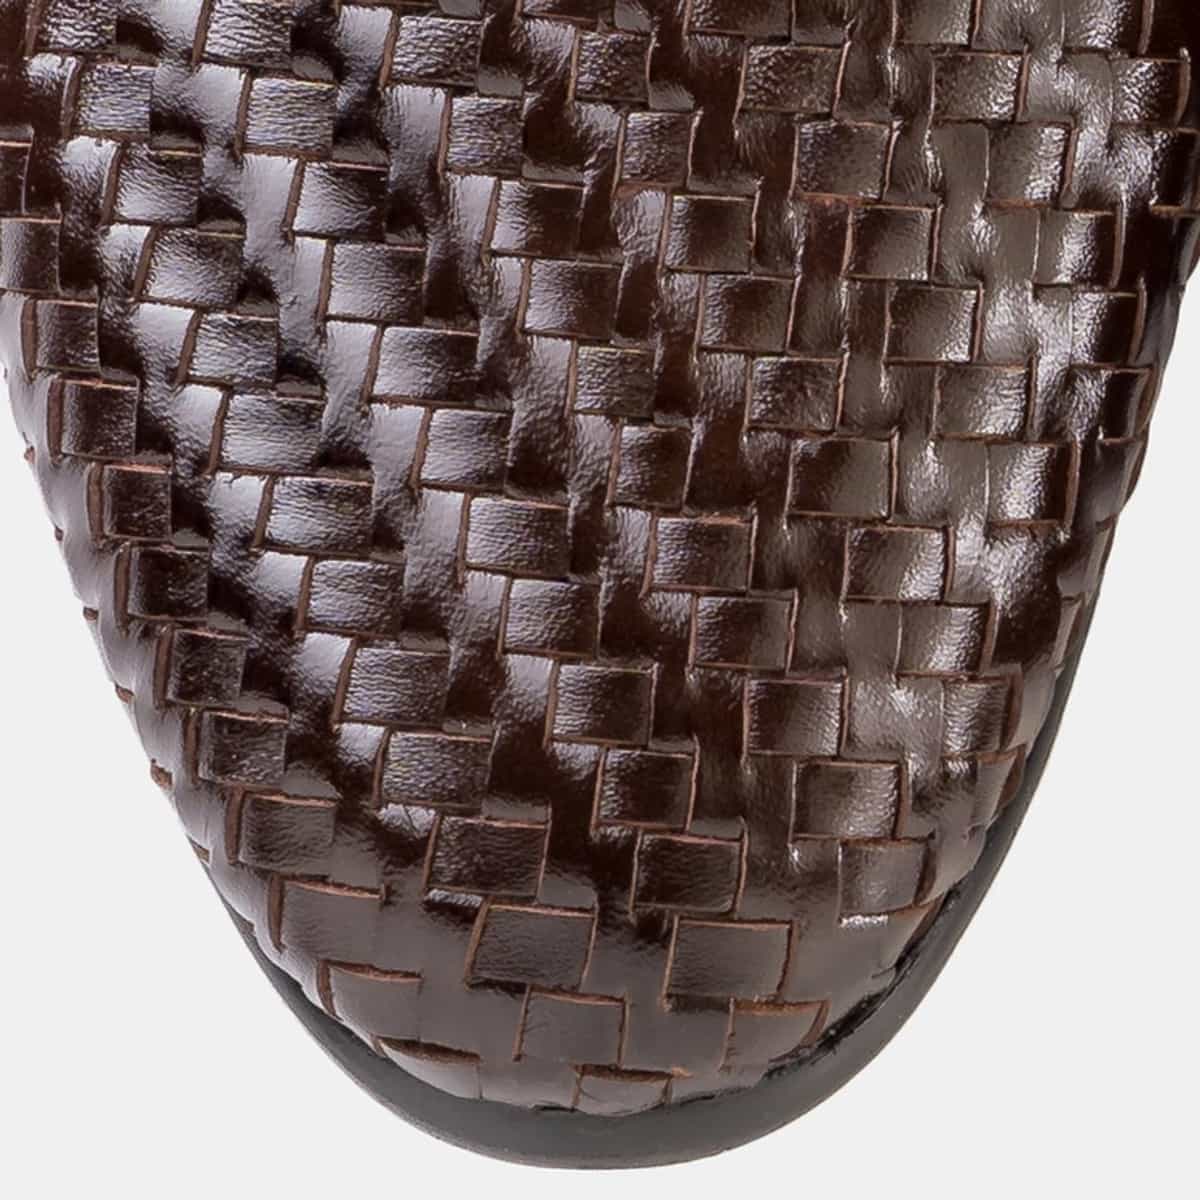 Braided Slipper in Cocoa Image